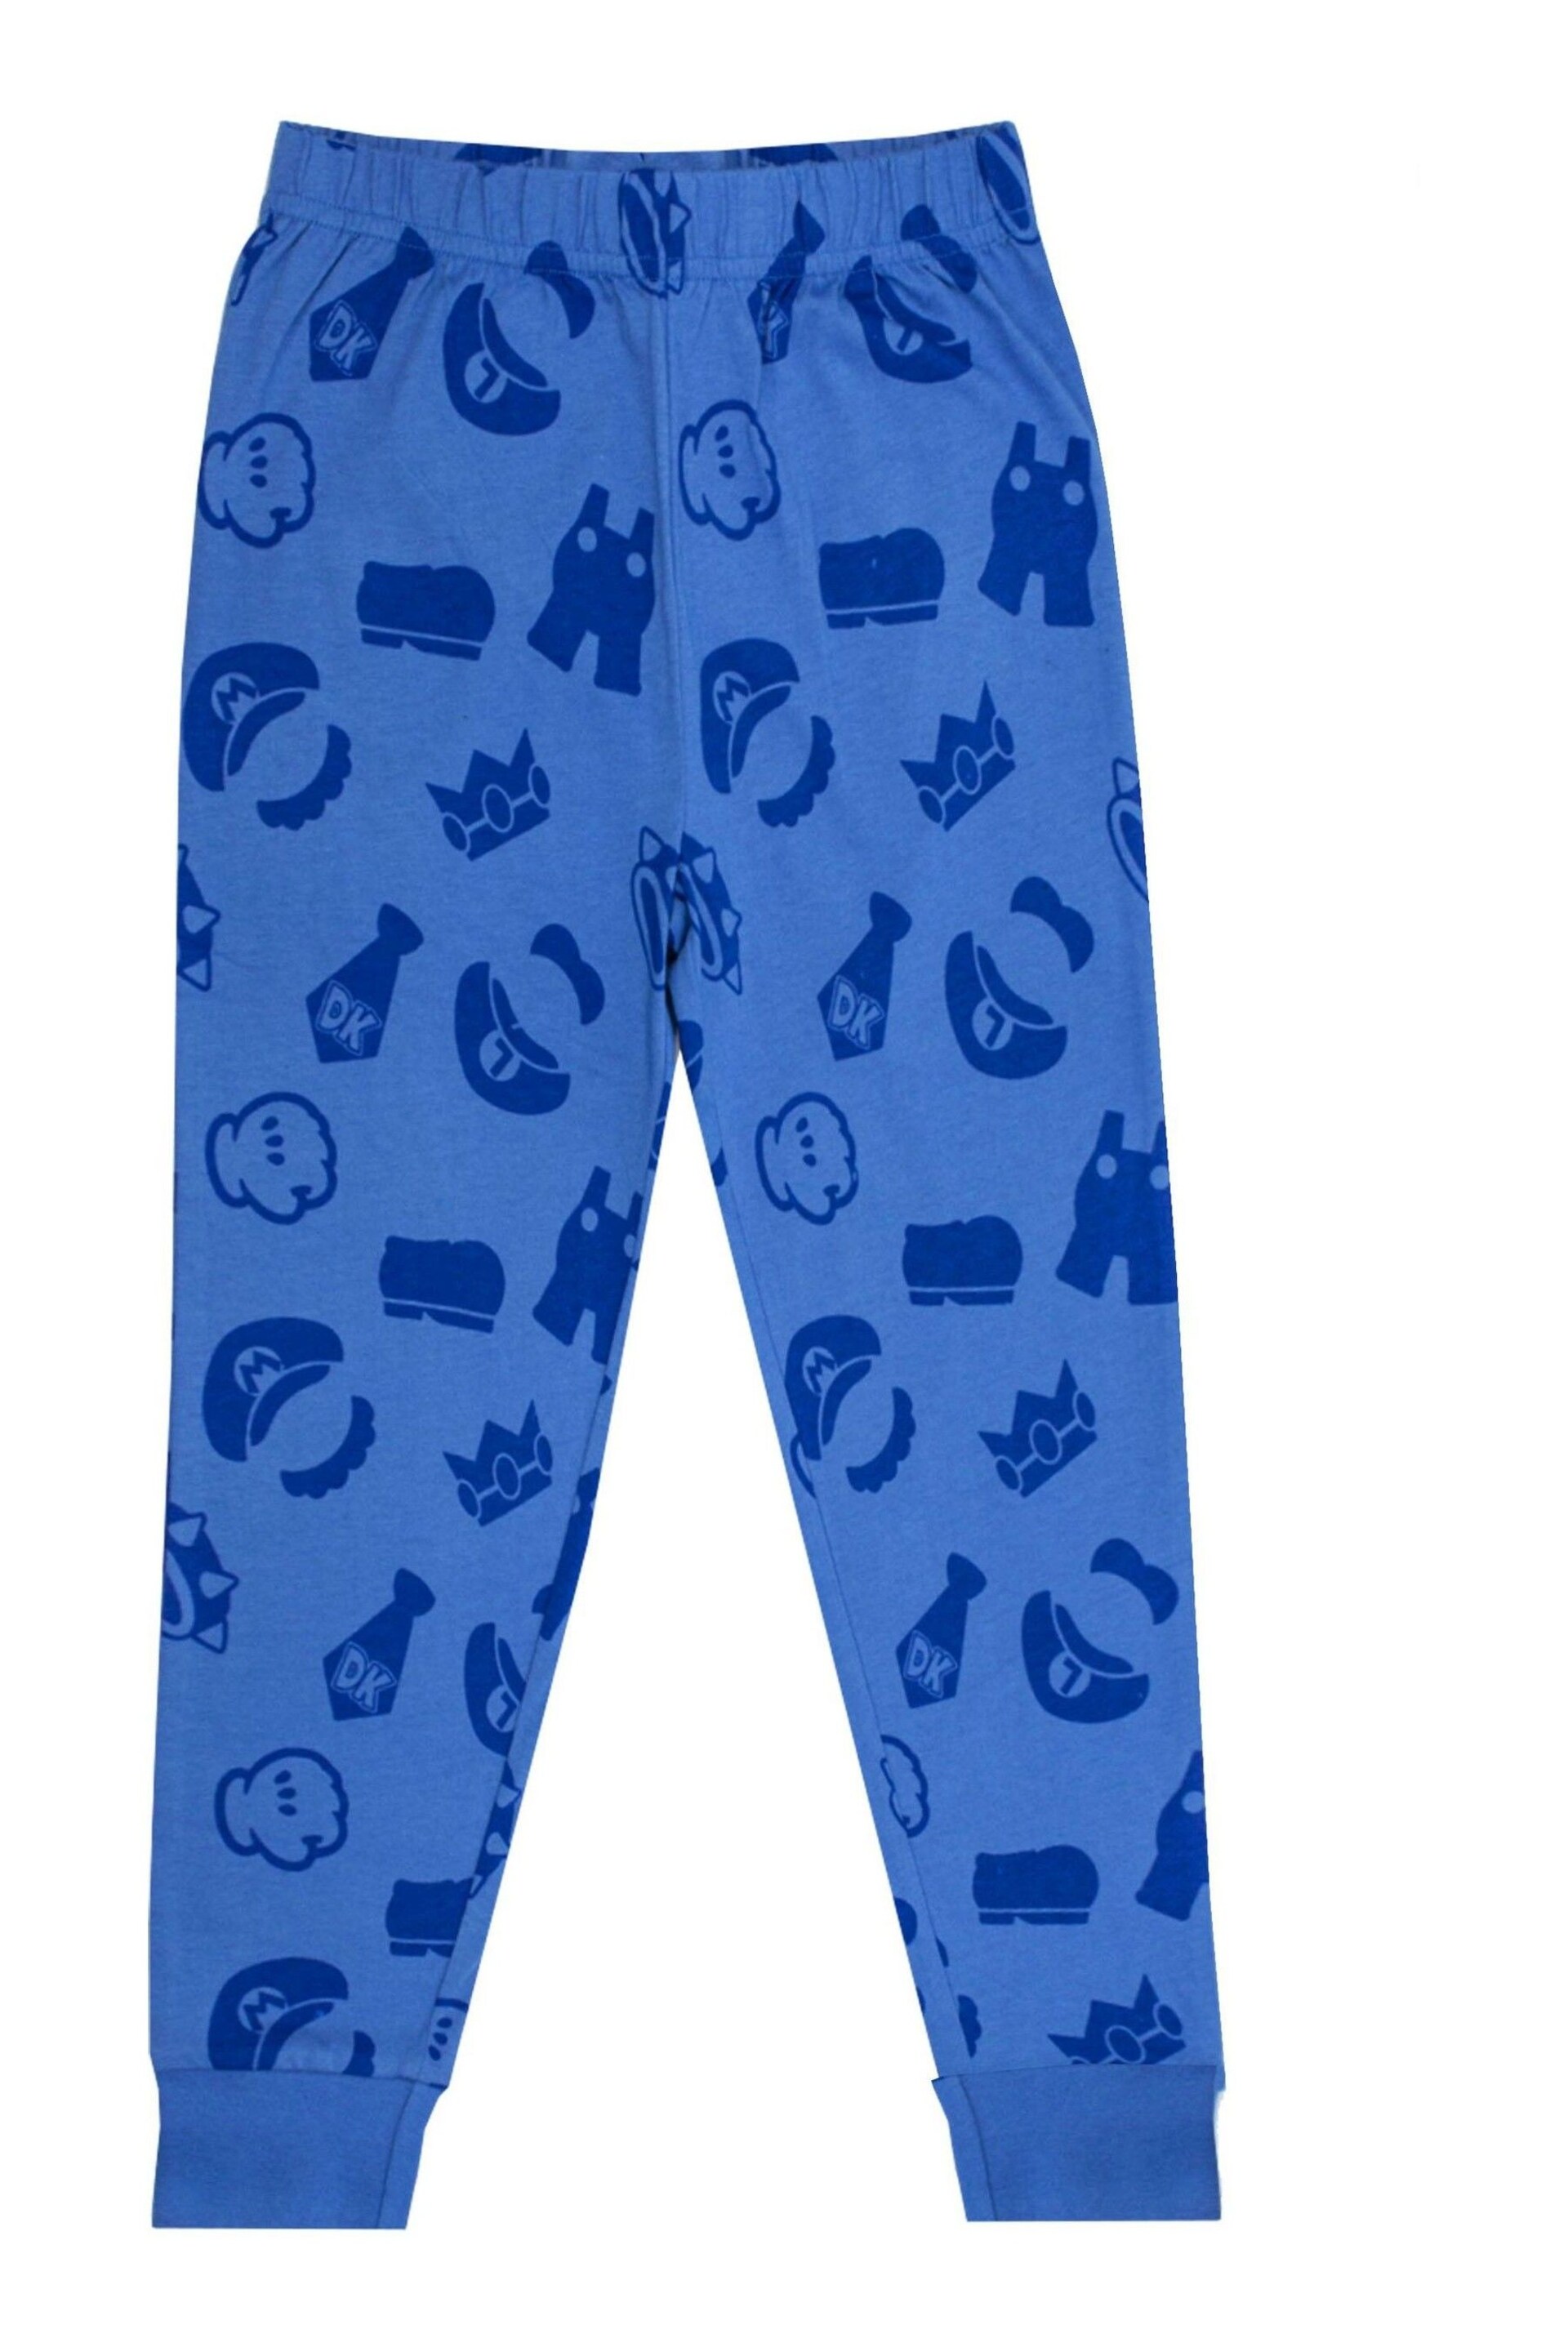 Vanilla Underground Blue Super Mario Long Leg Kids Pyjama Set - Image 4 of 6